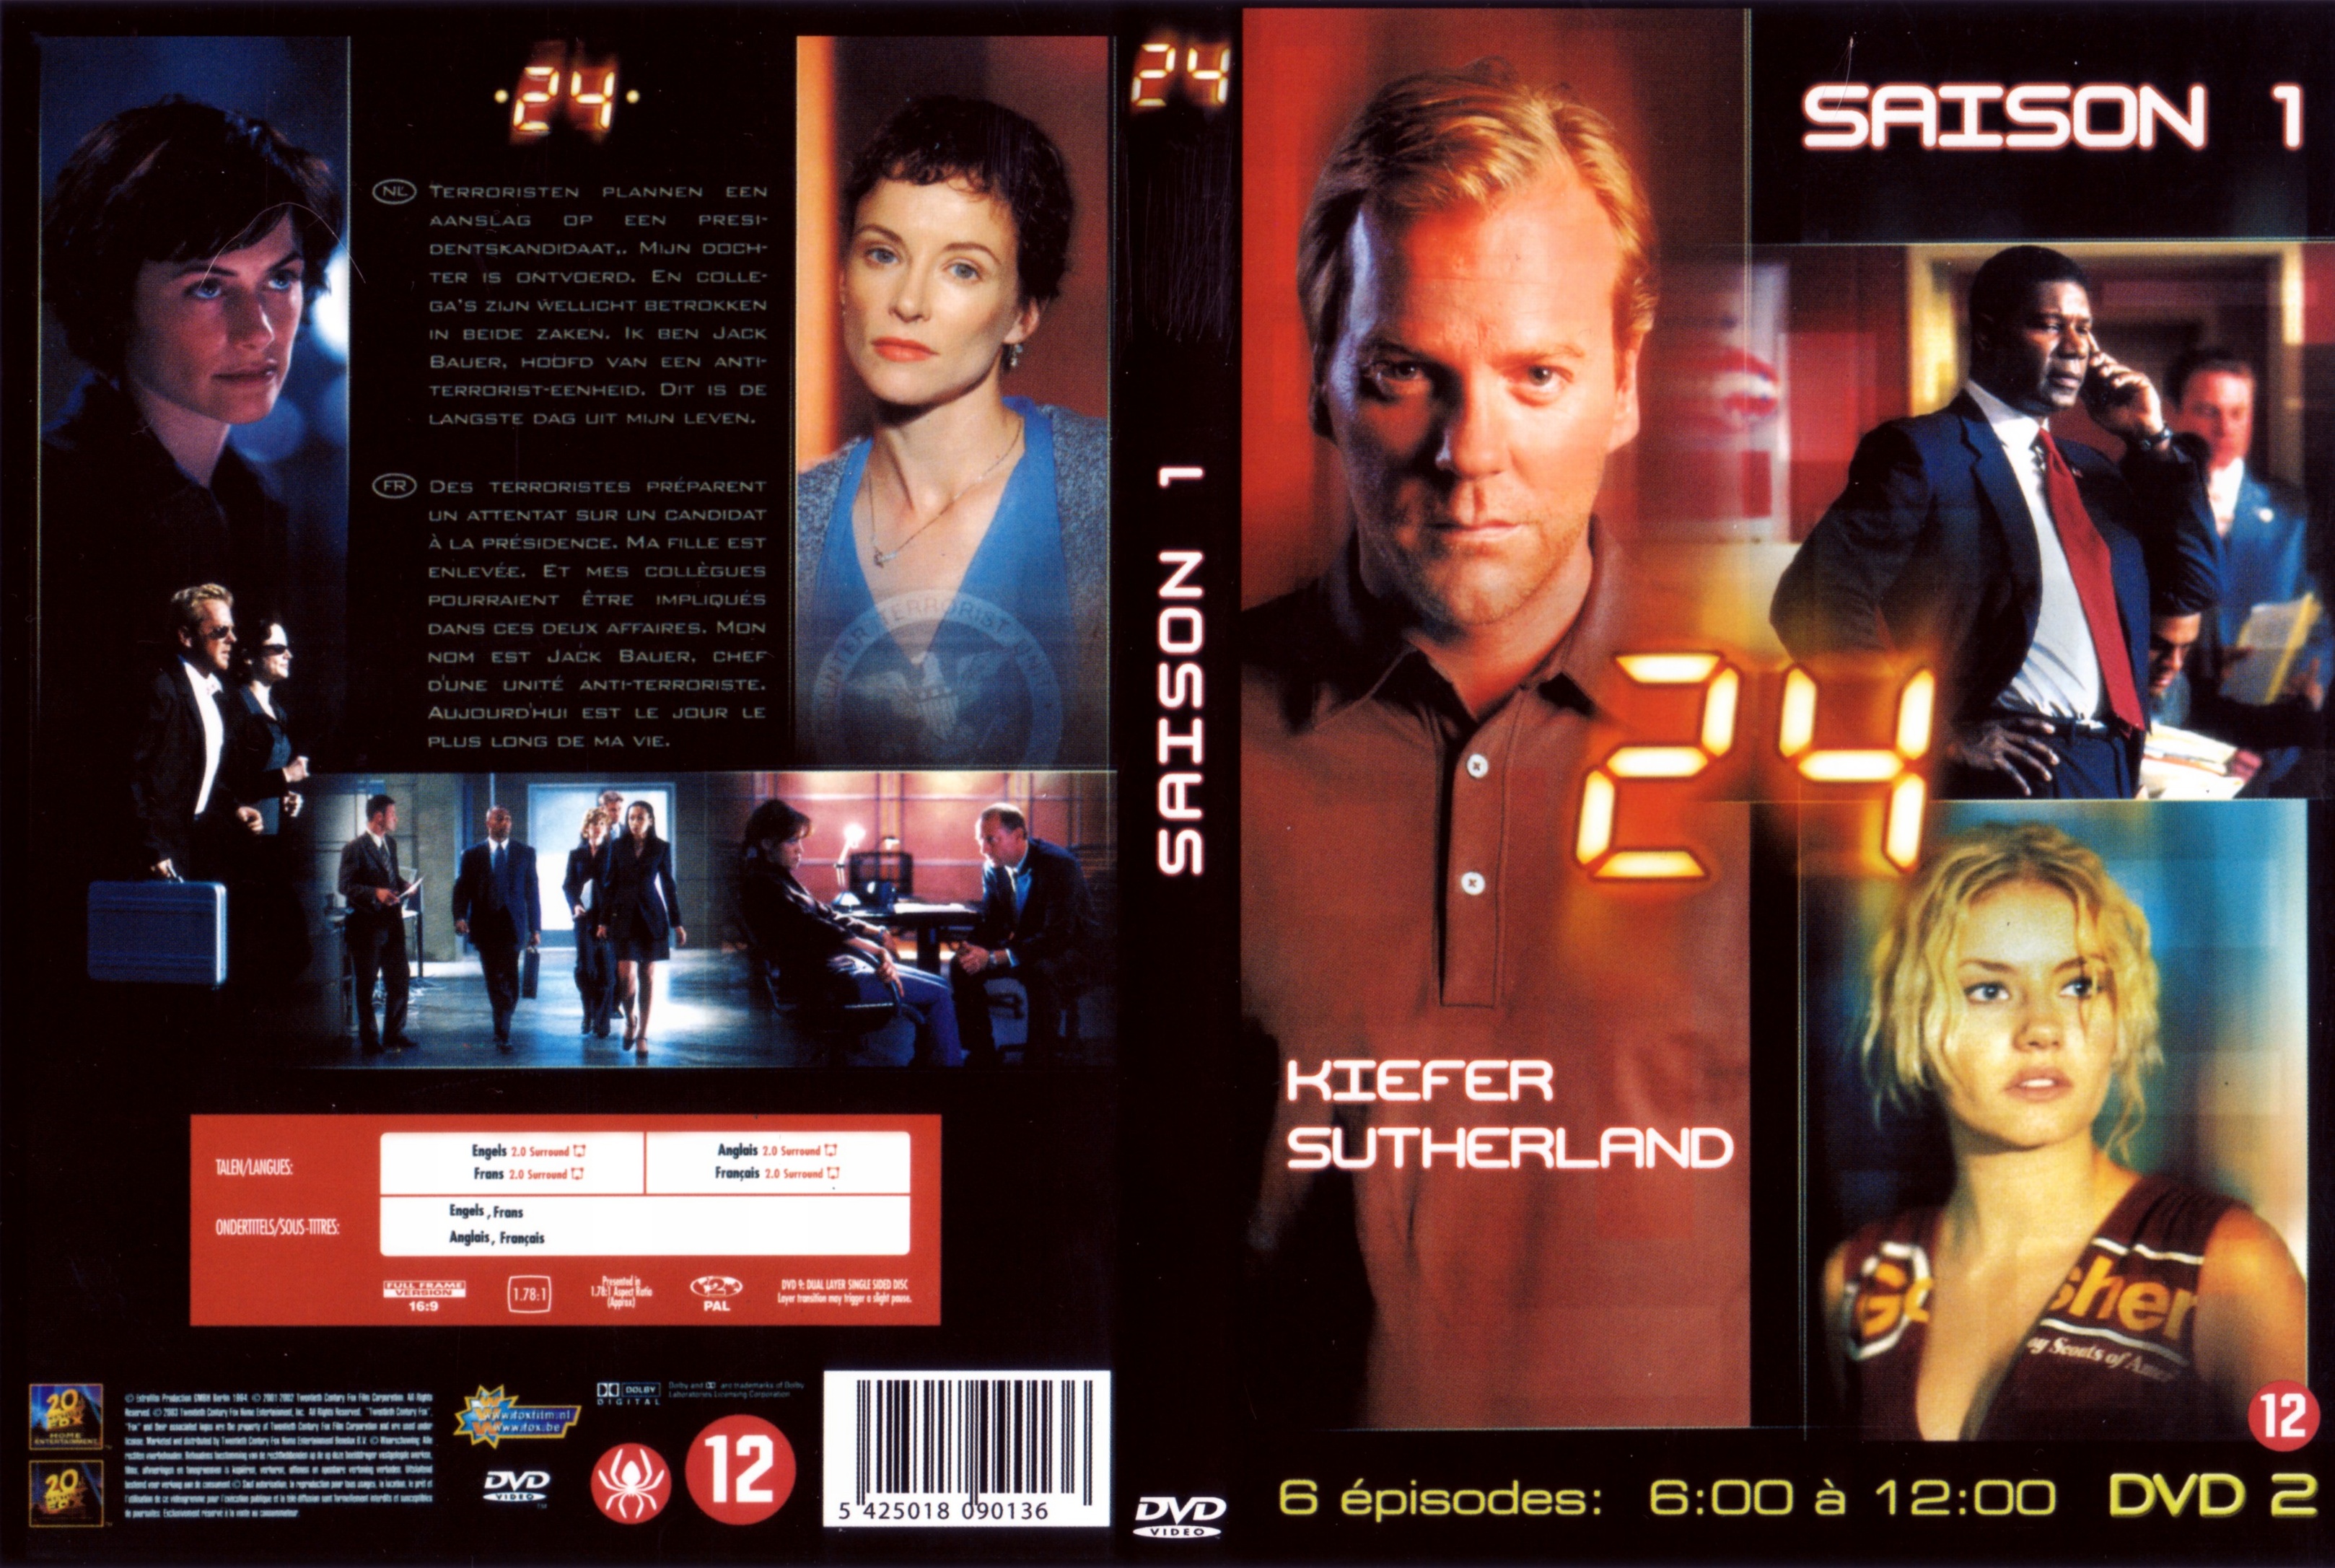 Jaquette DVD 24 heures chrono Saison 1 dvd 2 v2